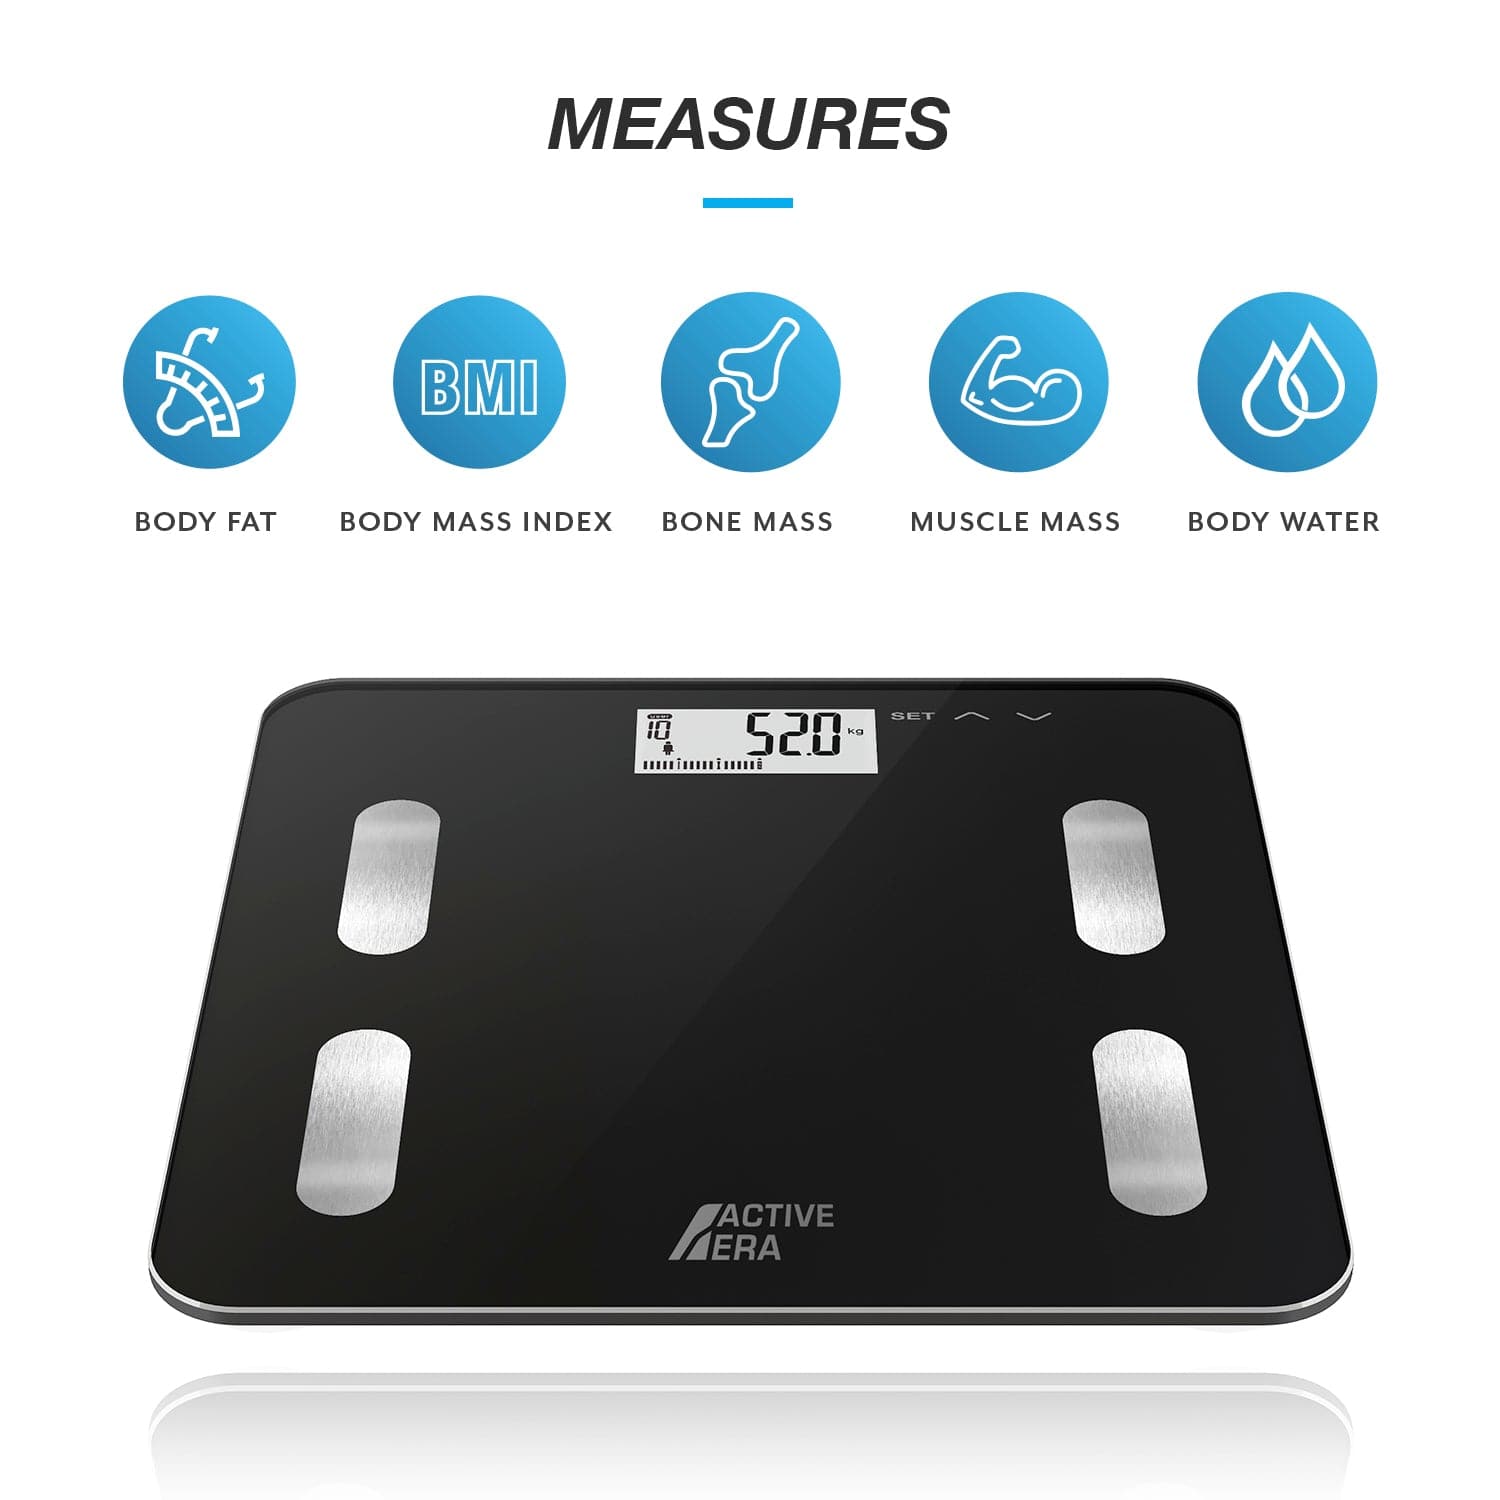 Digital Bathroom Scales - Black